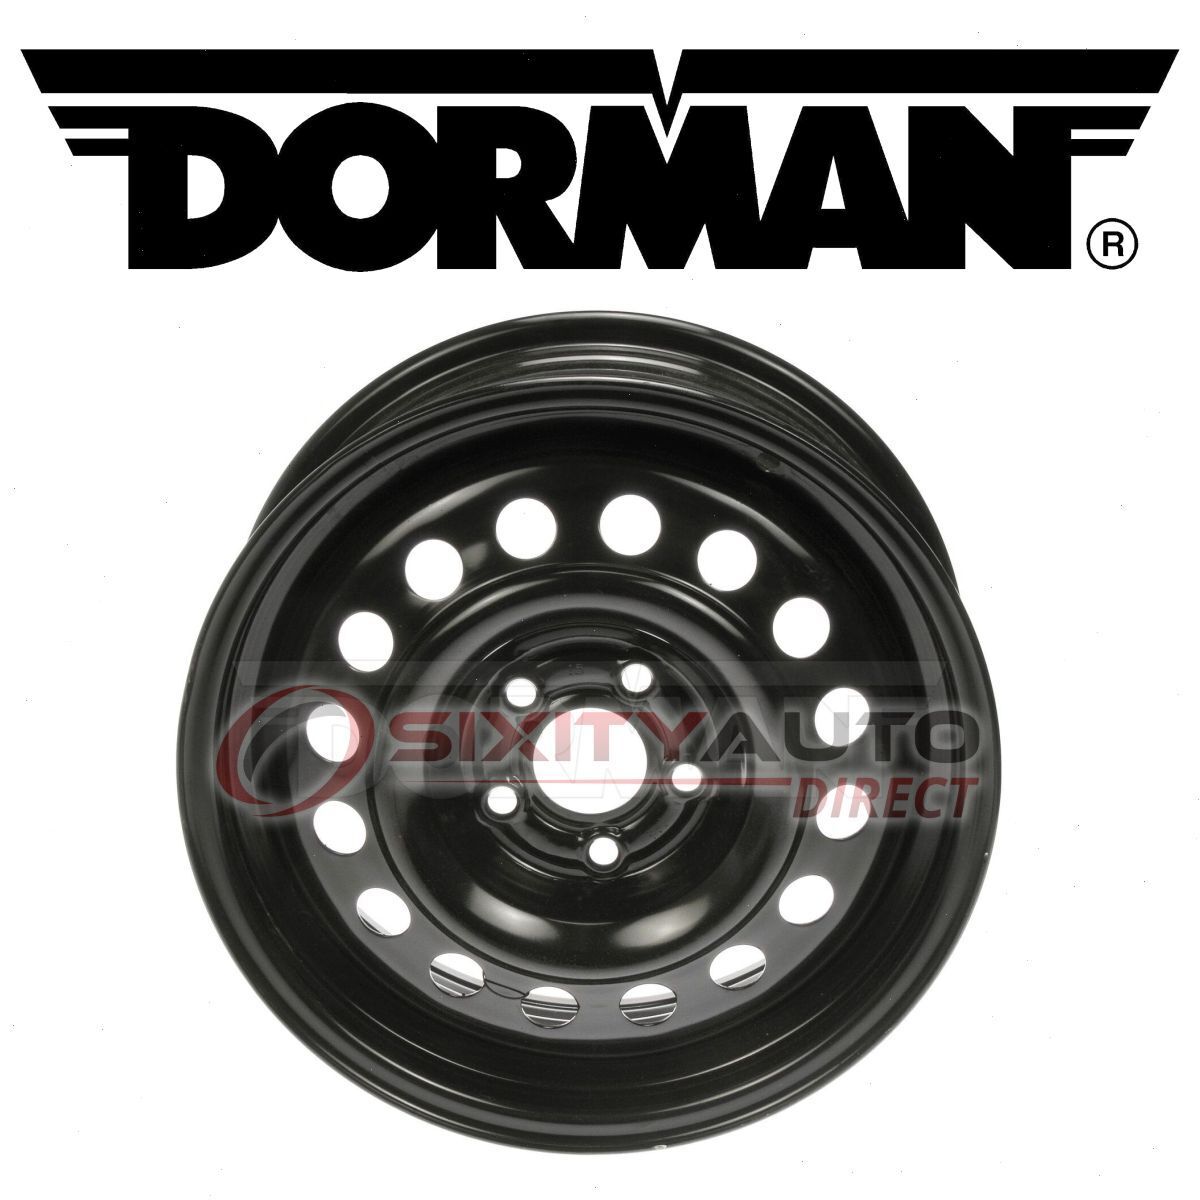 Dorman Wheel for 1995-2005 Pontiac Sunfire Tire  vc